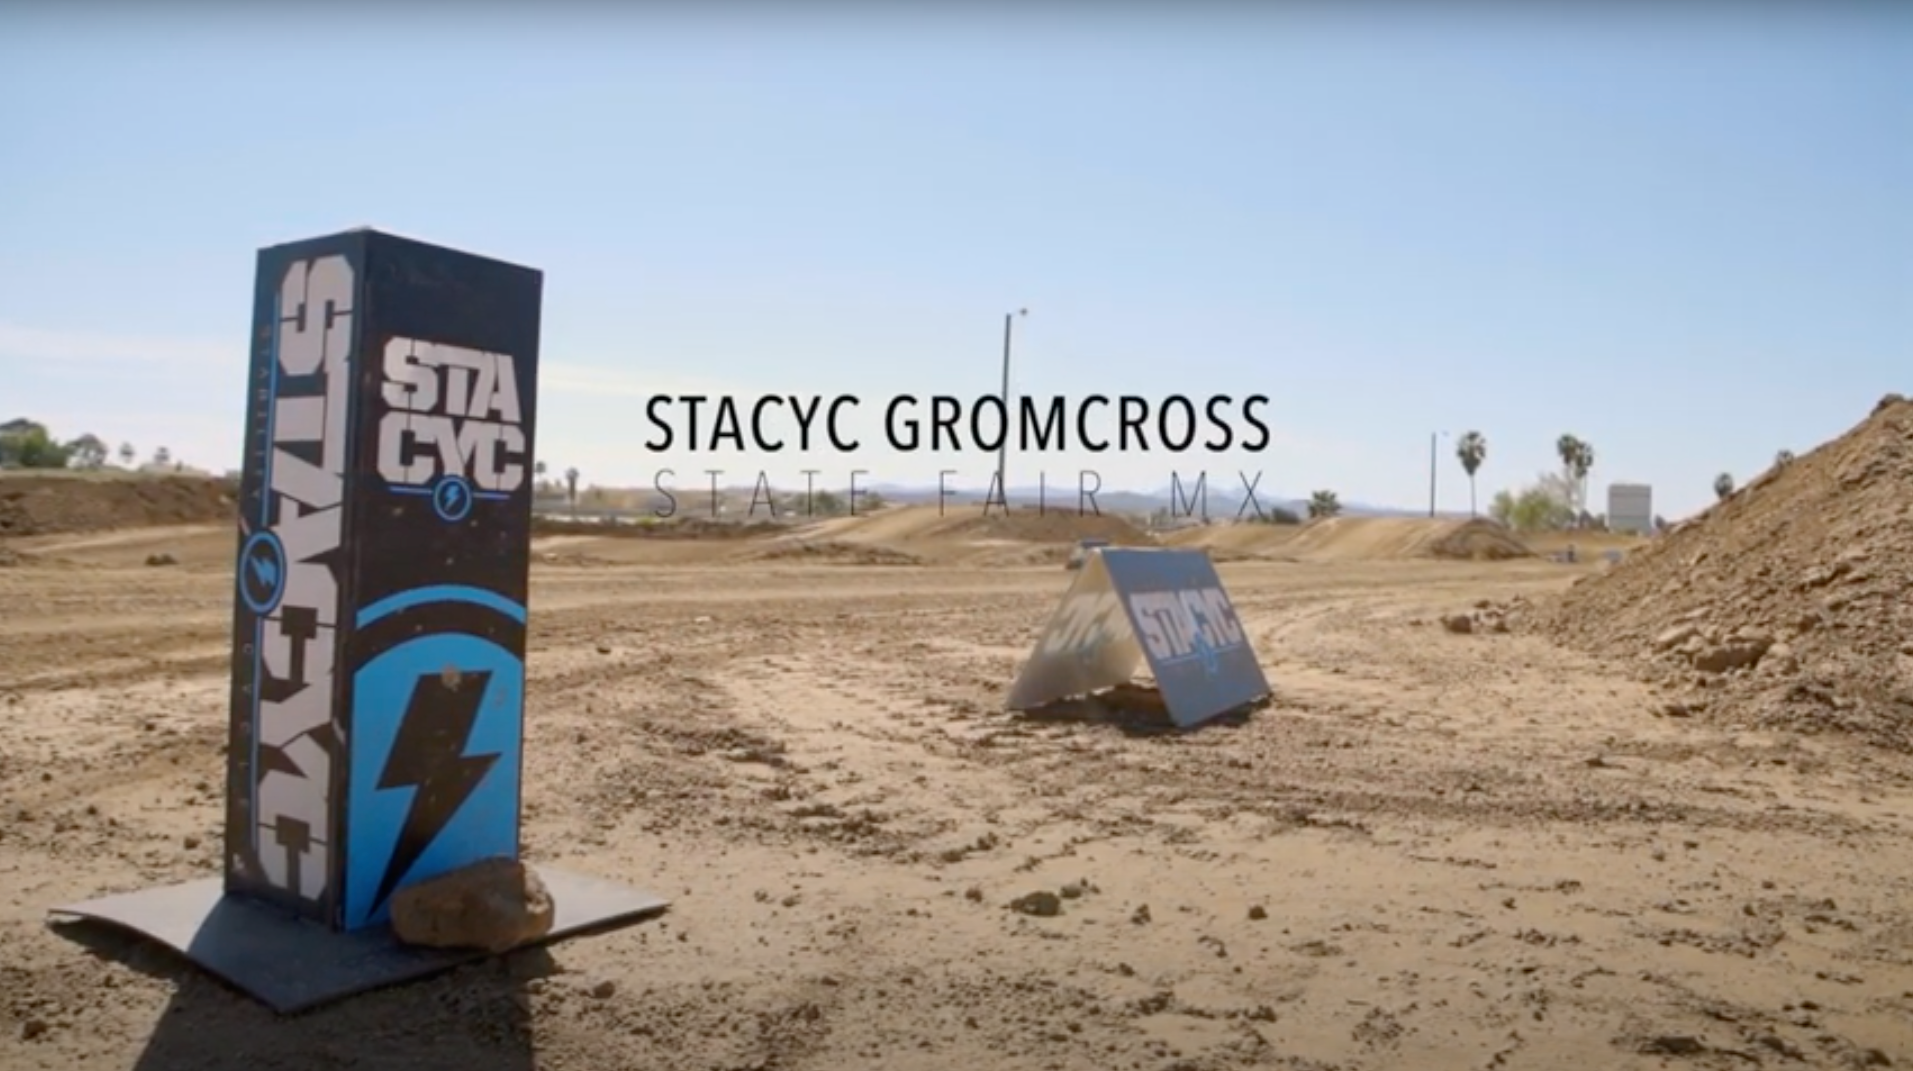 STACYC GROMCROSS Takes Over State Fair MX